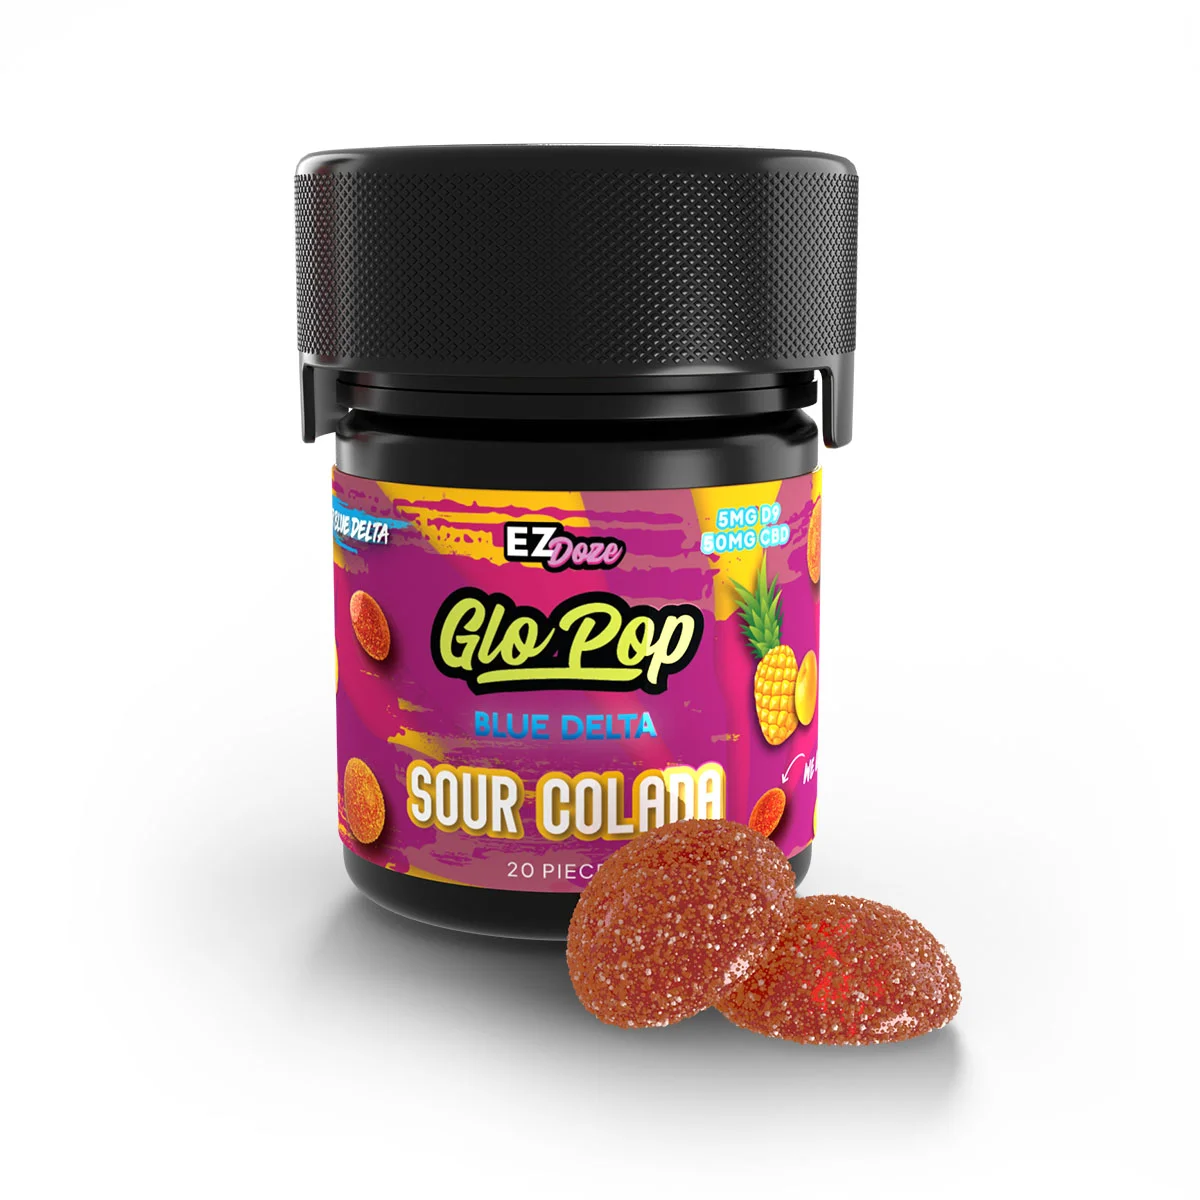 glopop-ez-dose-sour-colada-20pc-jar.jpg